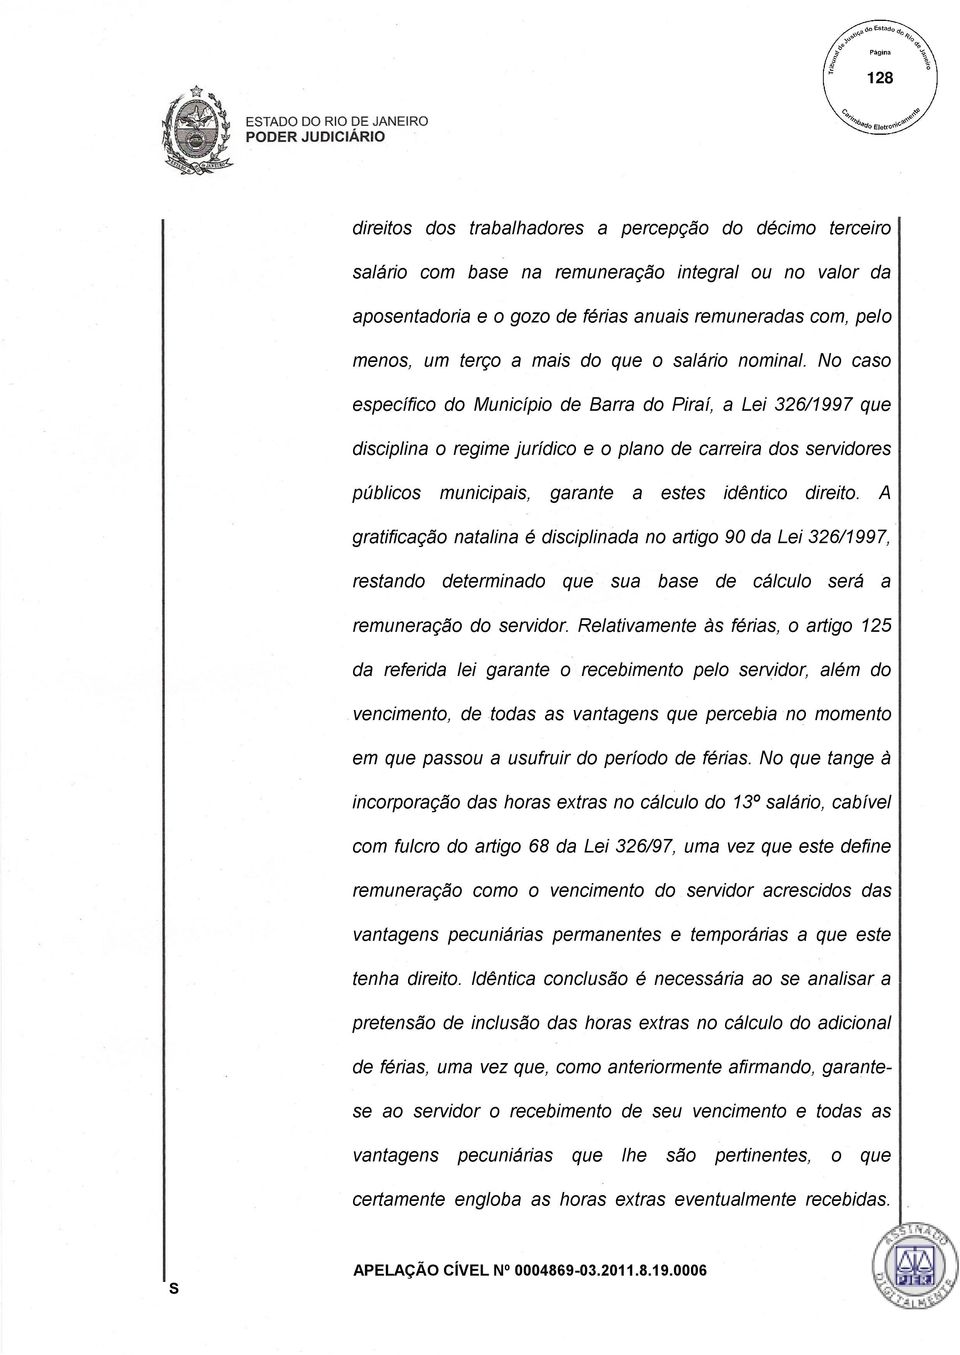 No caso específico do Município de Barra do Piraí, a Lei 326/1997 que disciplina o regime jurídico e o plano de carreira dos servidores públicos municipais, garante a estes idêntico direito.